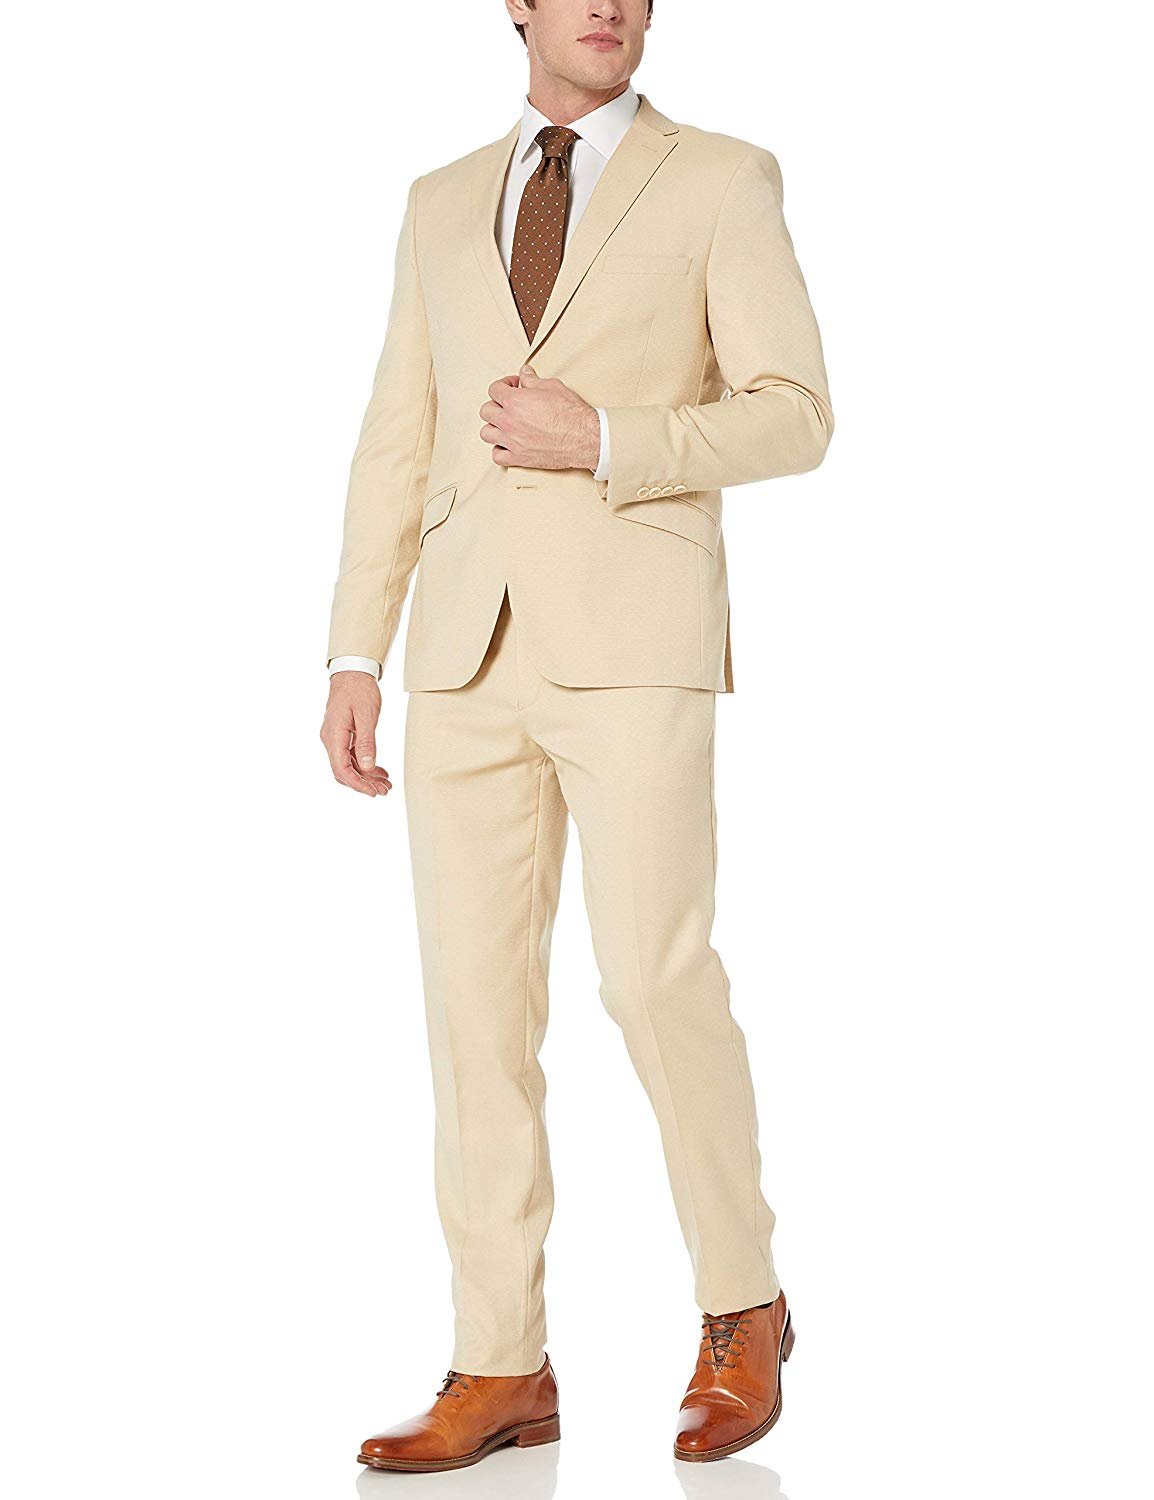 Adam Baker by West End Men's 910969 2-Piece Slim Fit End On End Suit - Sand - 48L - image 1 of 5